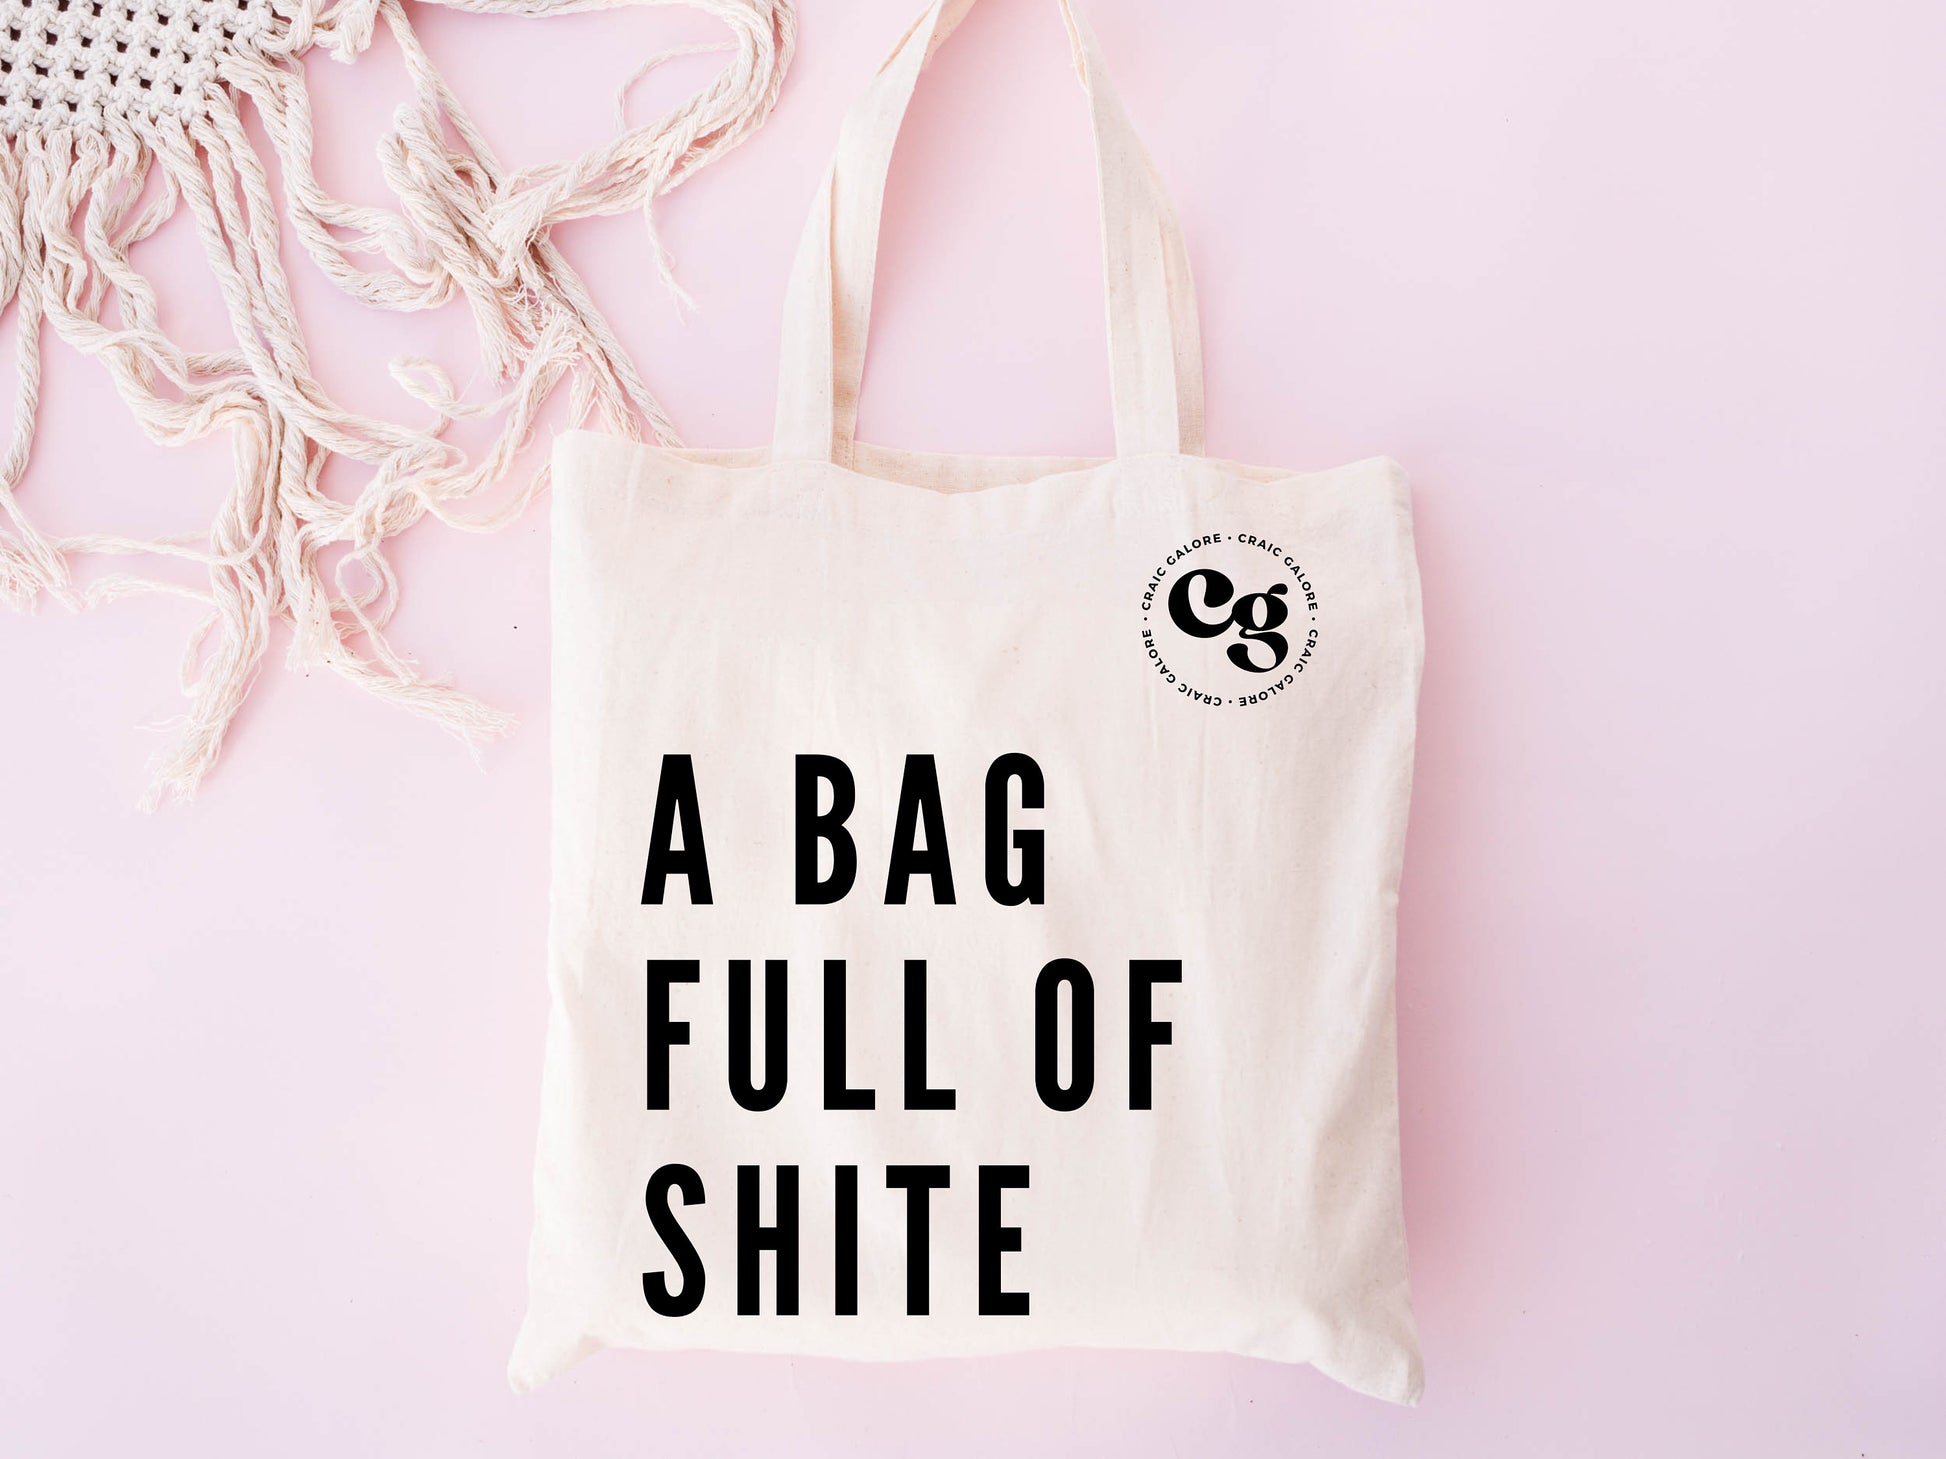 A bag full of shite